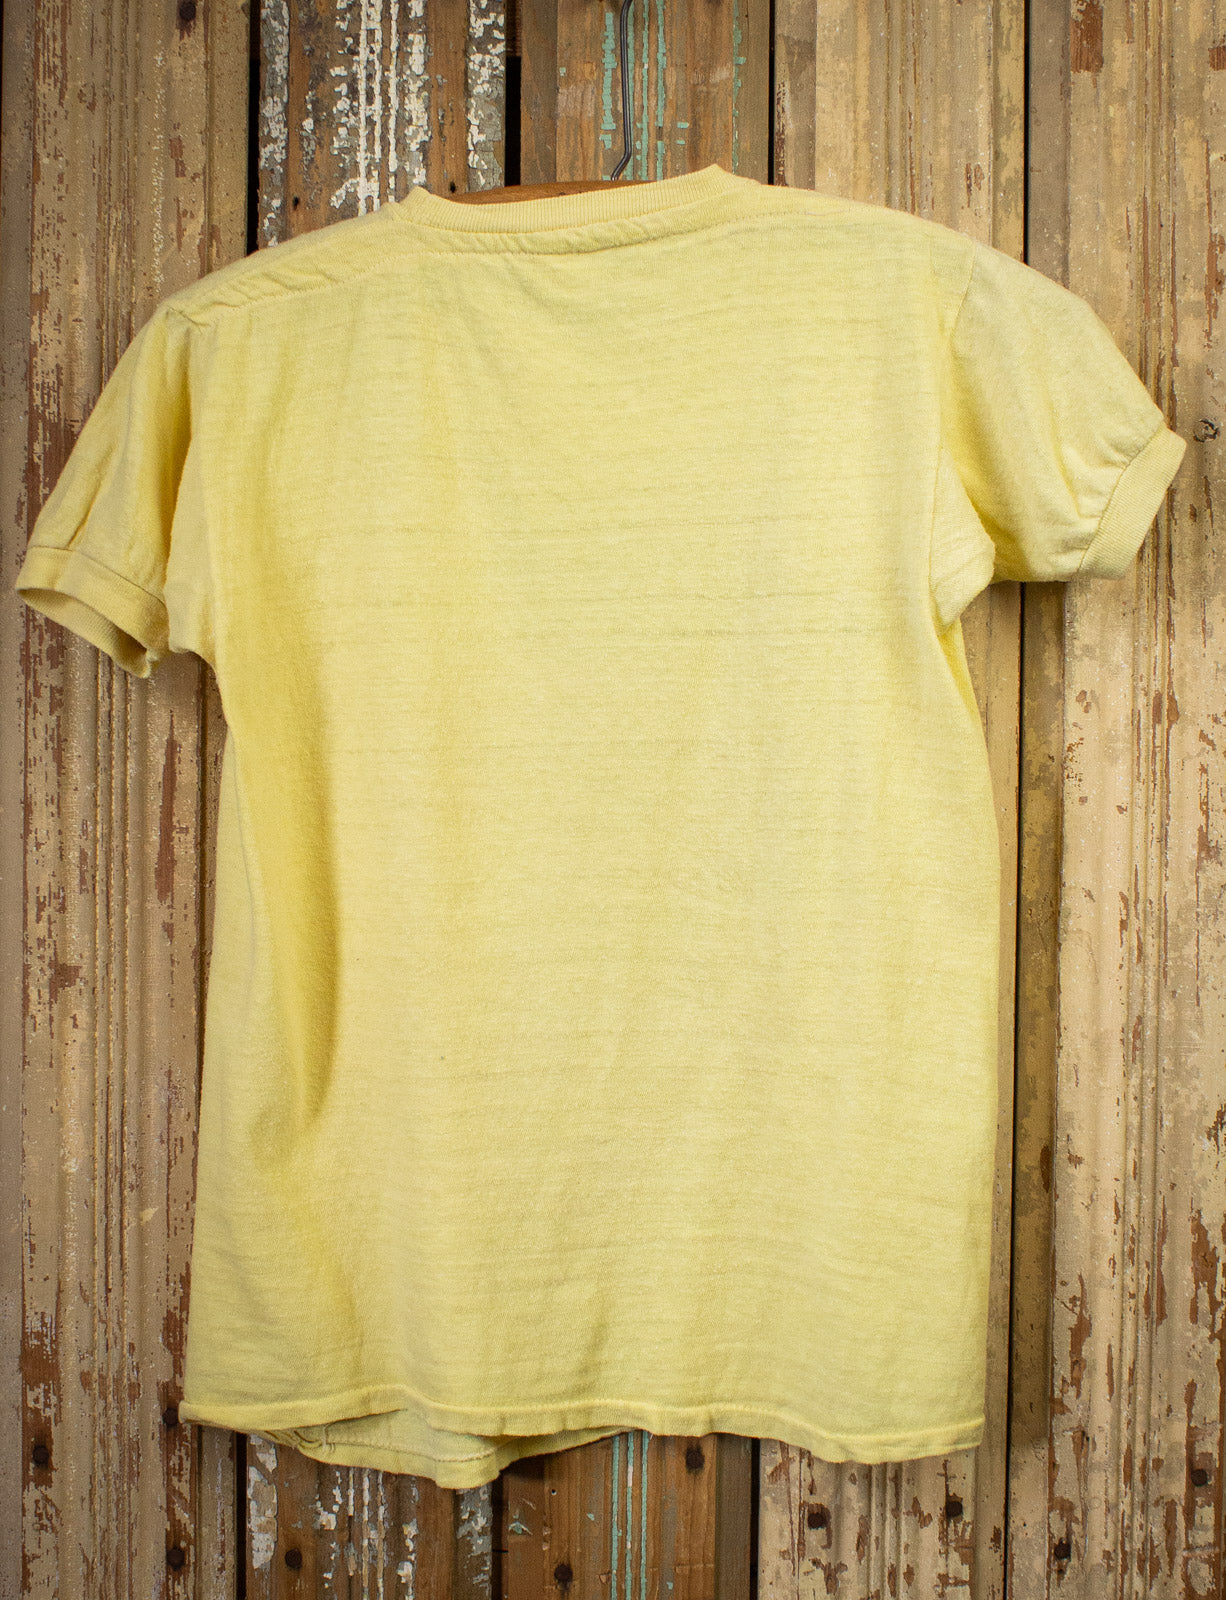 Vintage Joe Cocker Unanimous Declaration Concert T Shirt 70s Yellow Small